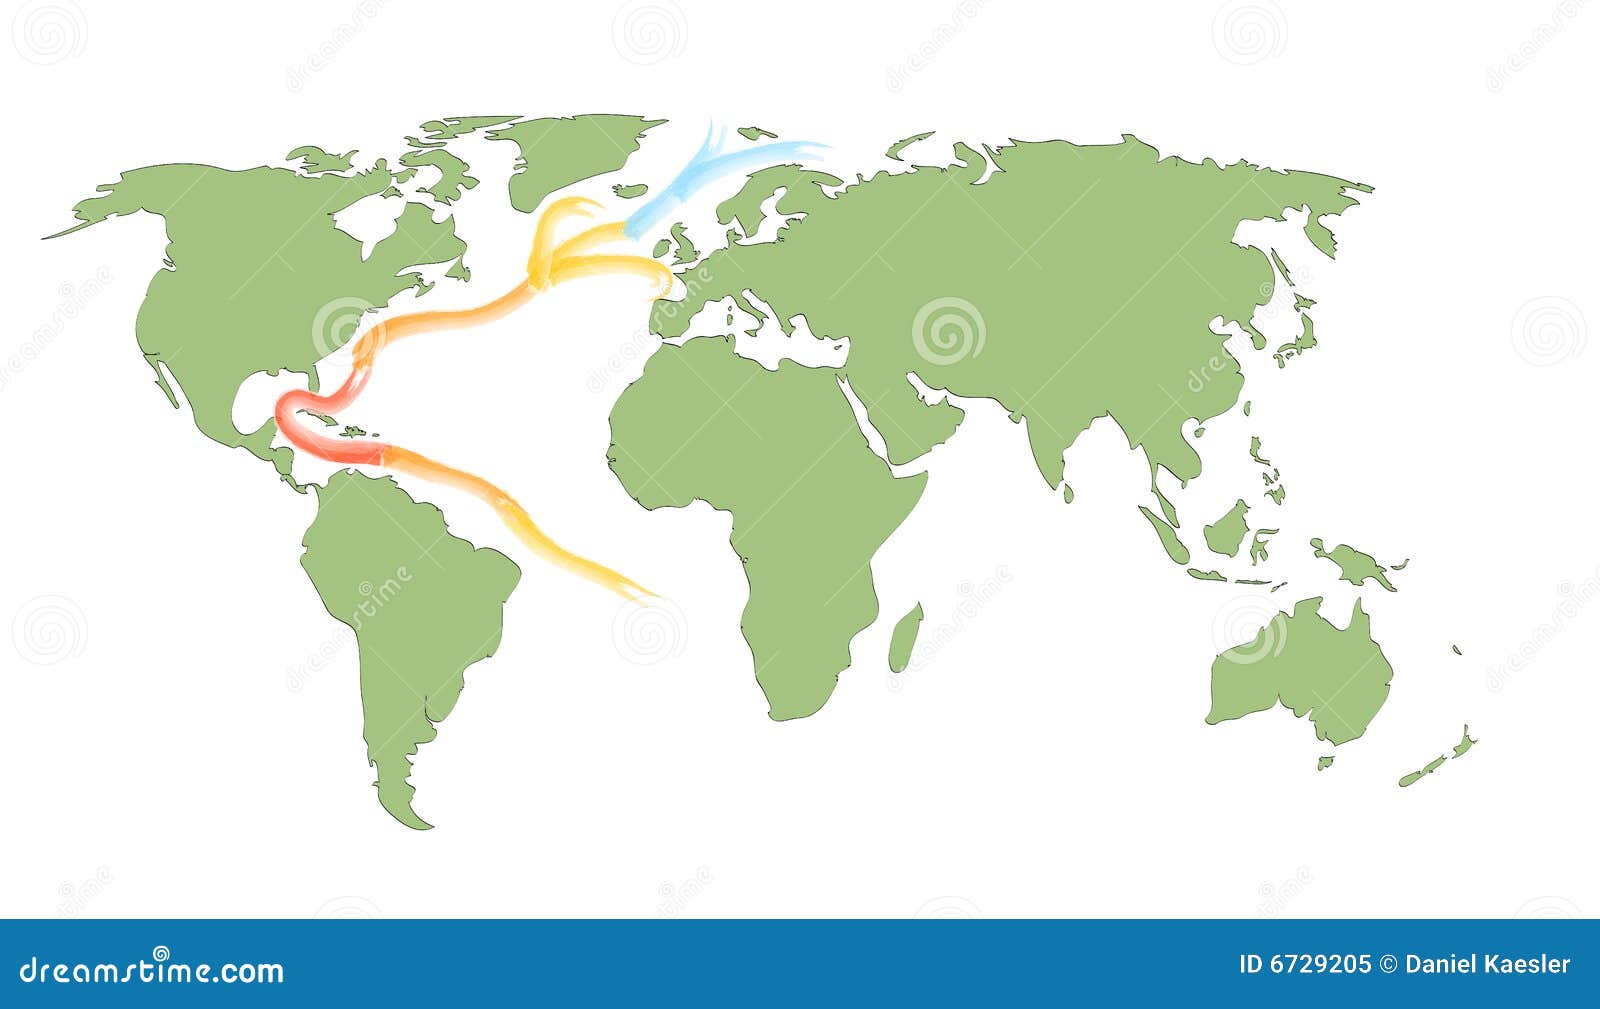 gulf stream world map